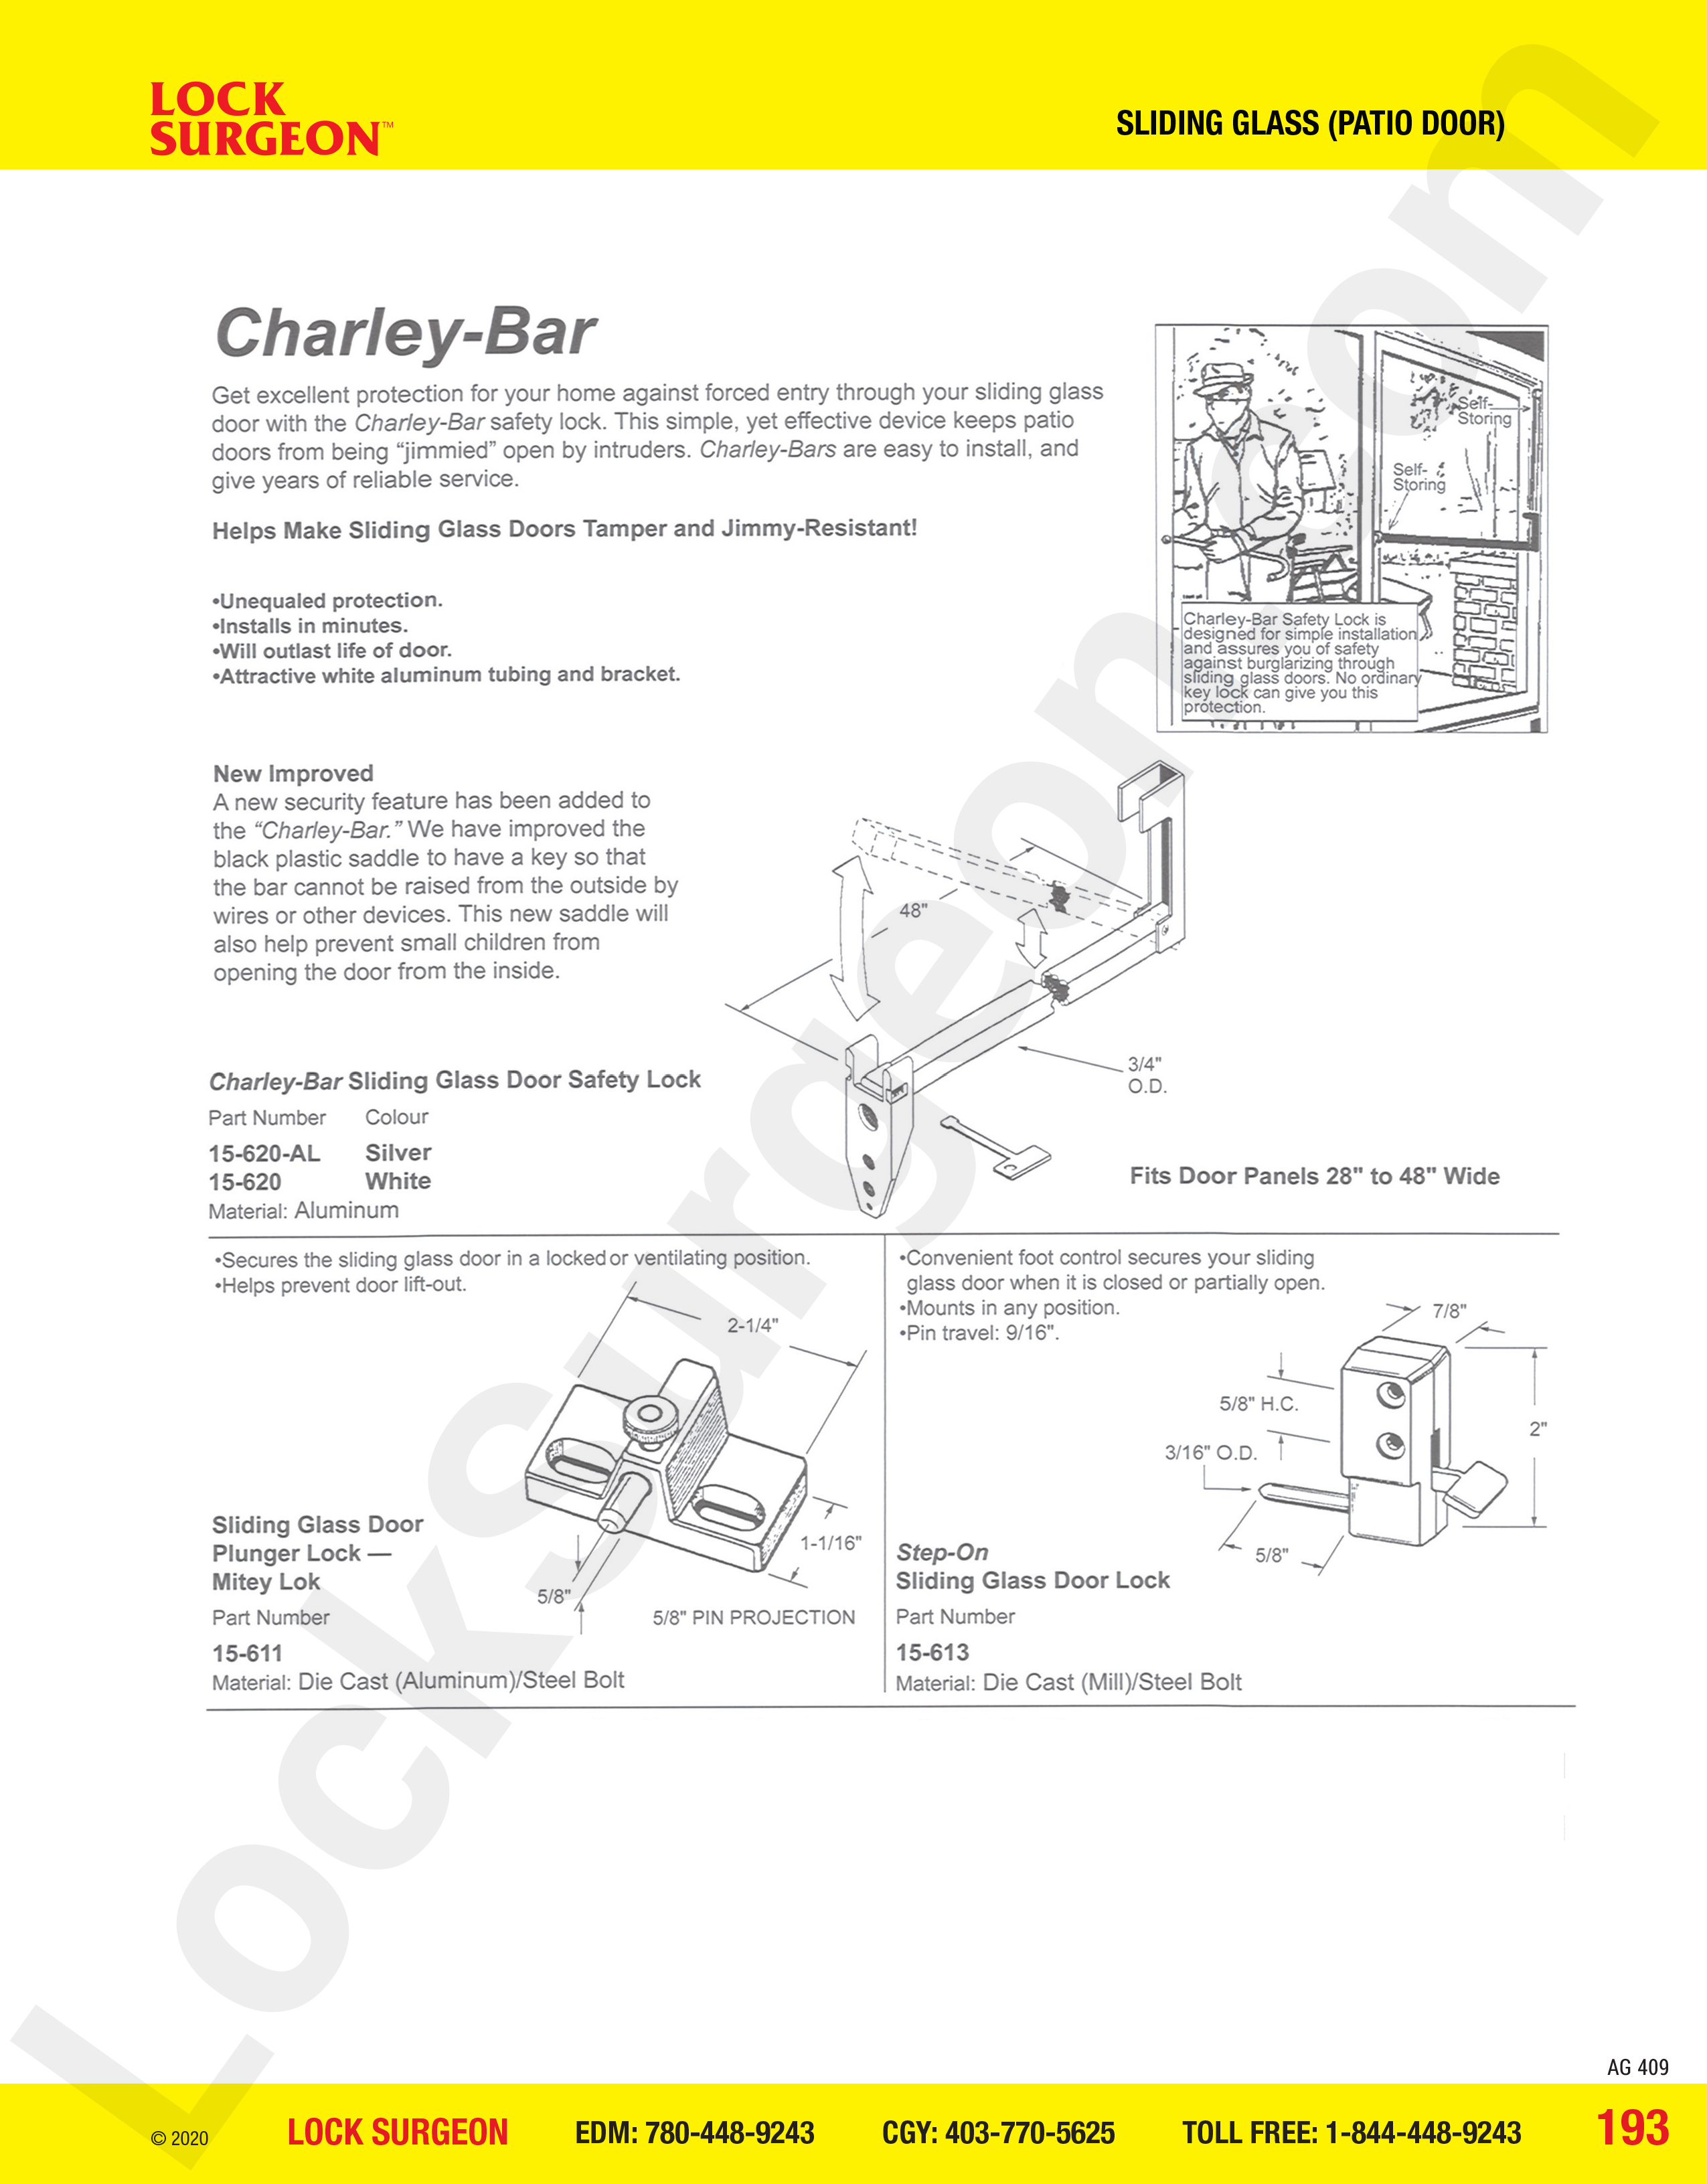 Charley-bar & Step-on sliding glass door safety locks, Mitey Lok sliding glass door plunger lock